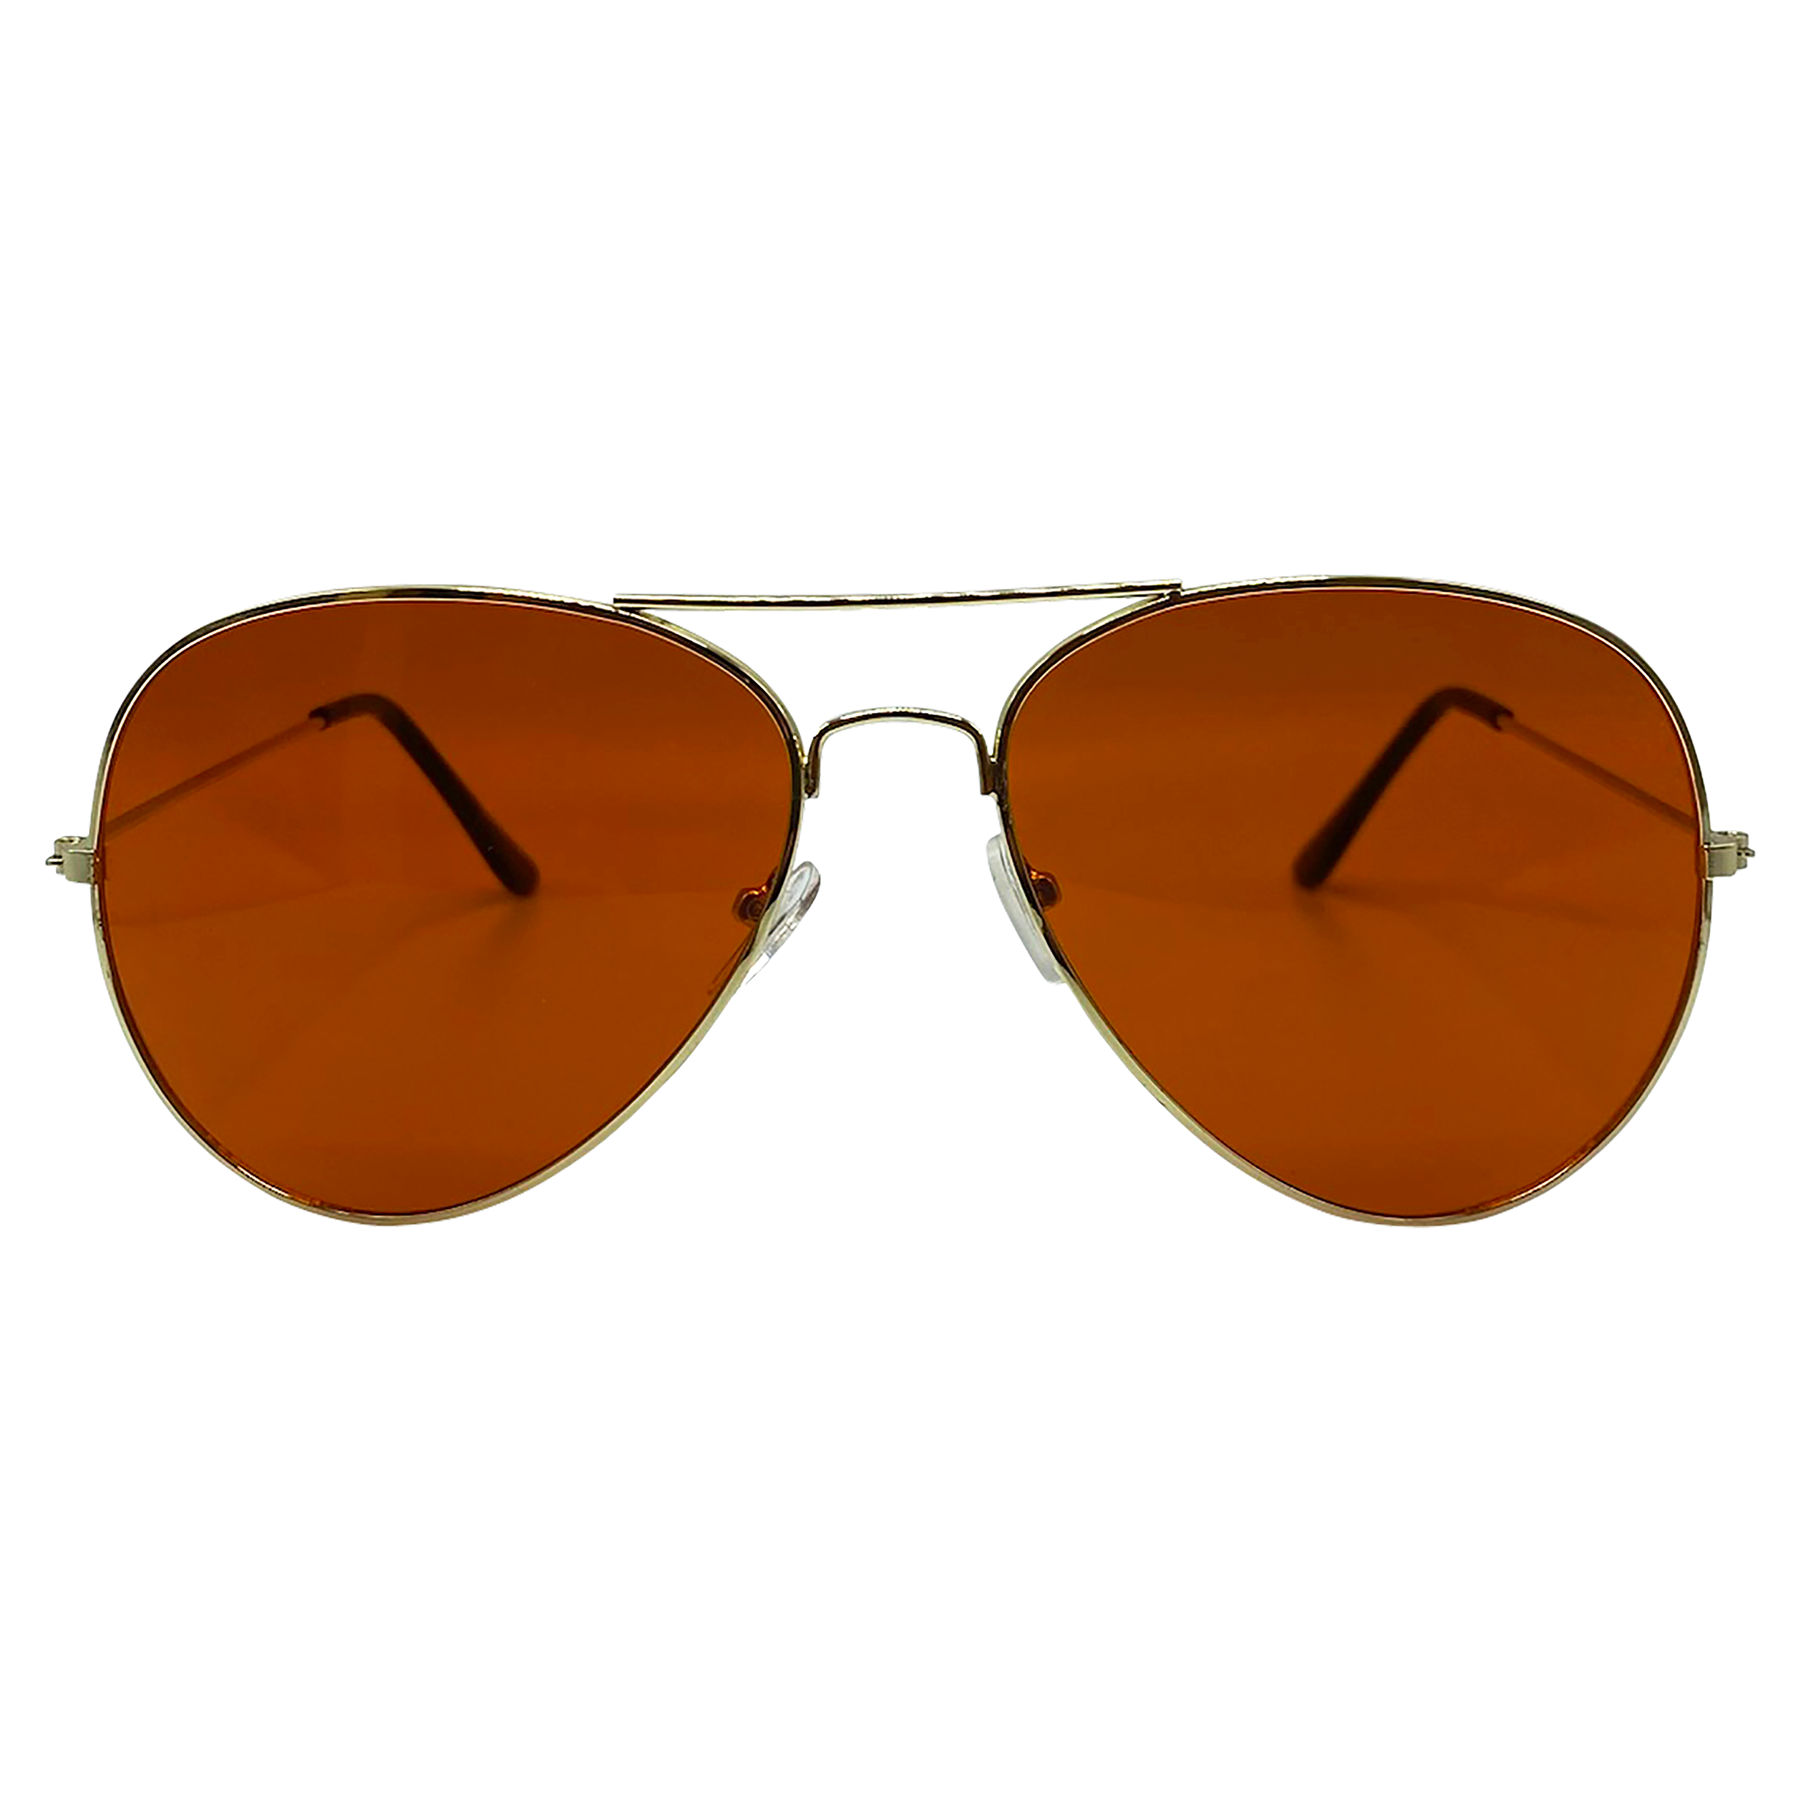 FILTER Gold Aviator Sunglasses